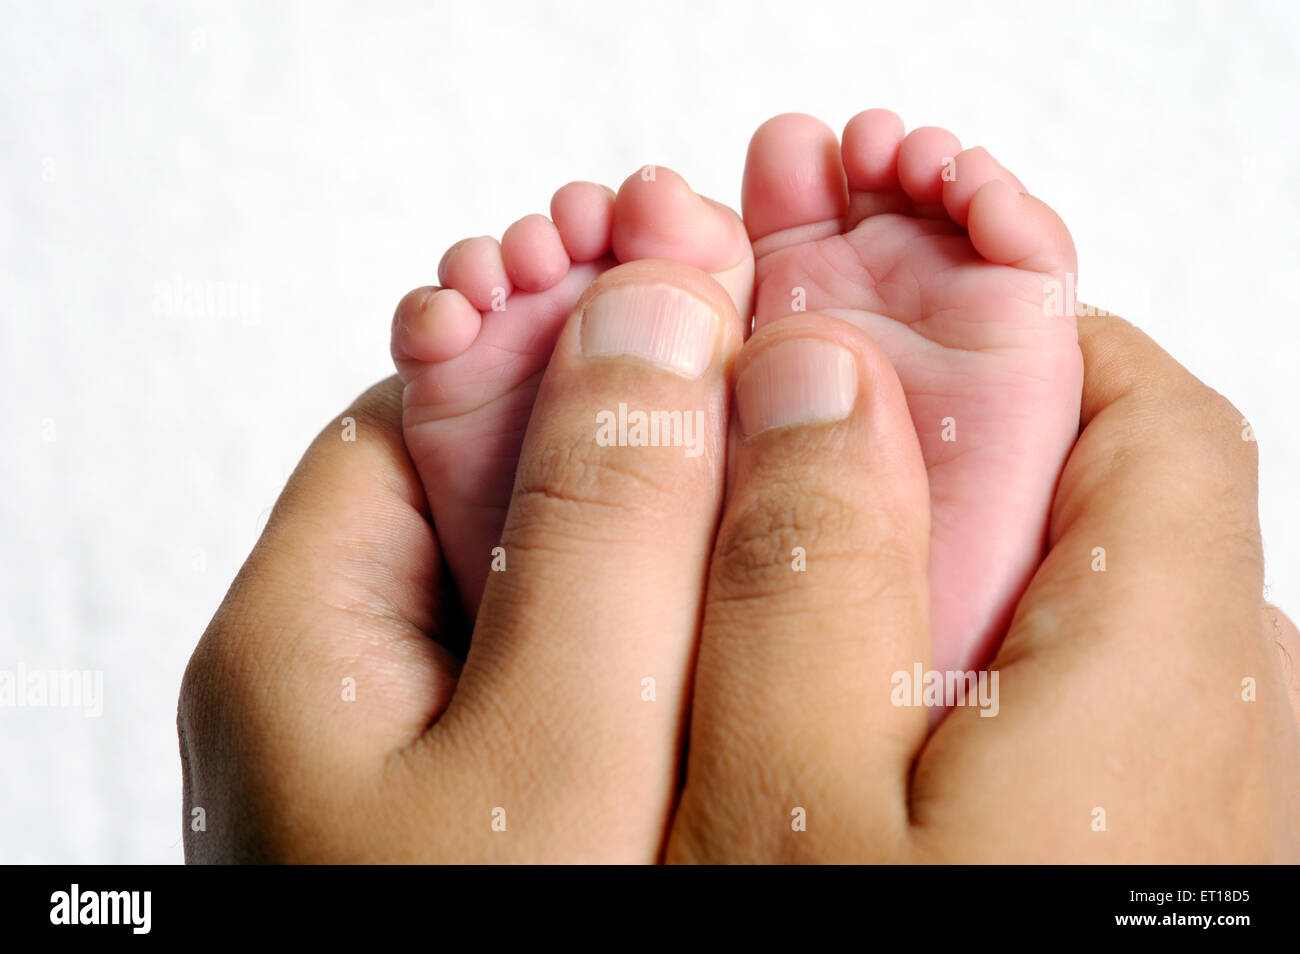 Father holding just born baby feet MR#736J&LA Stock Photo